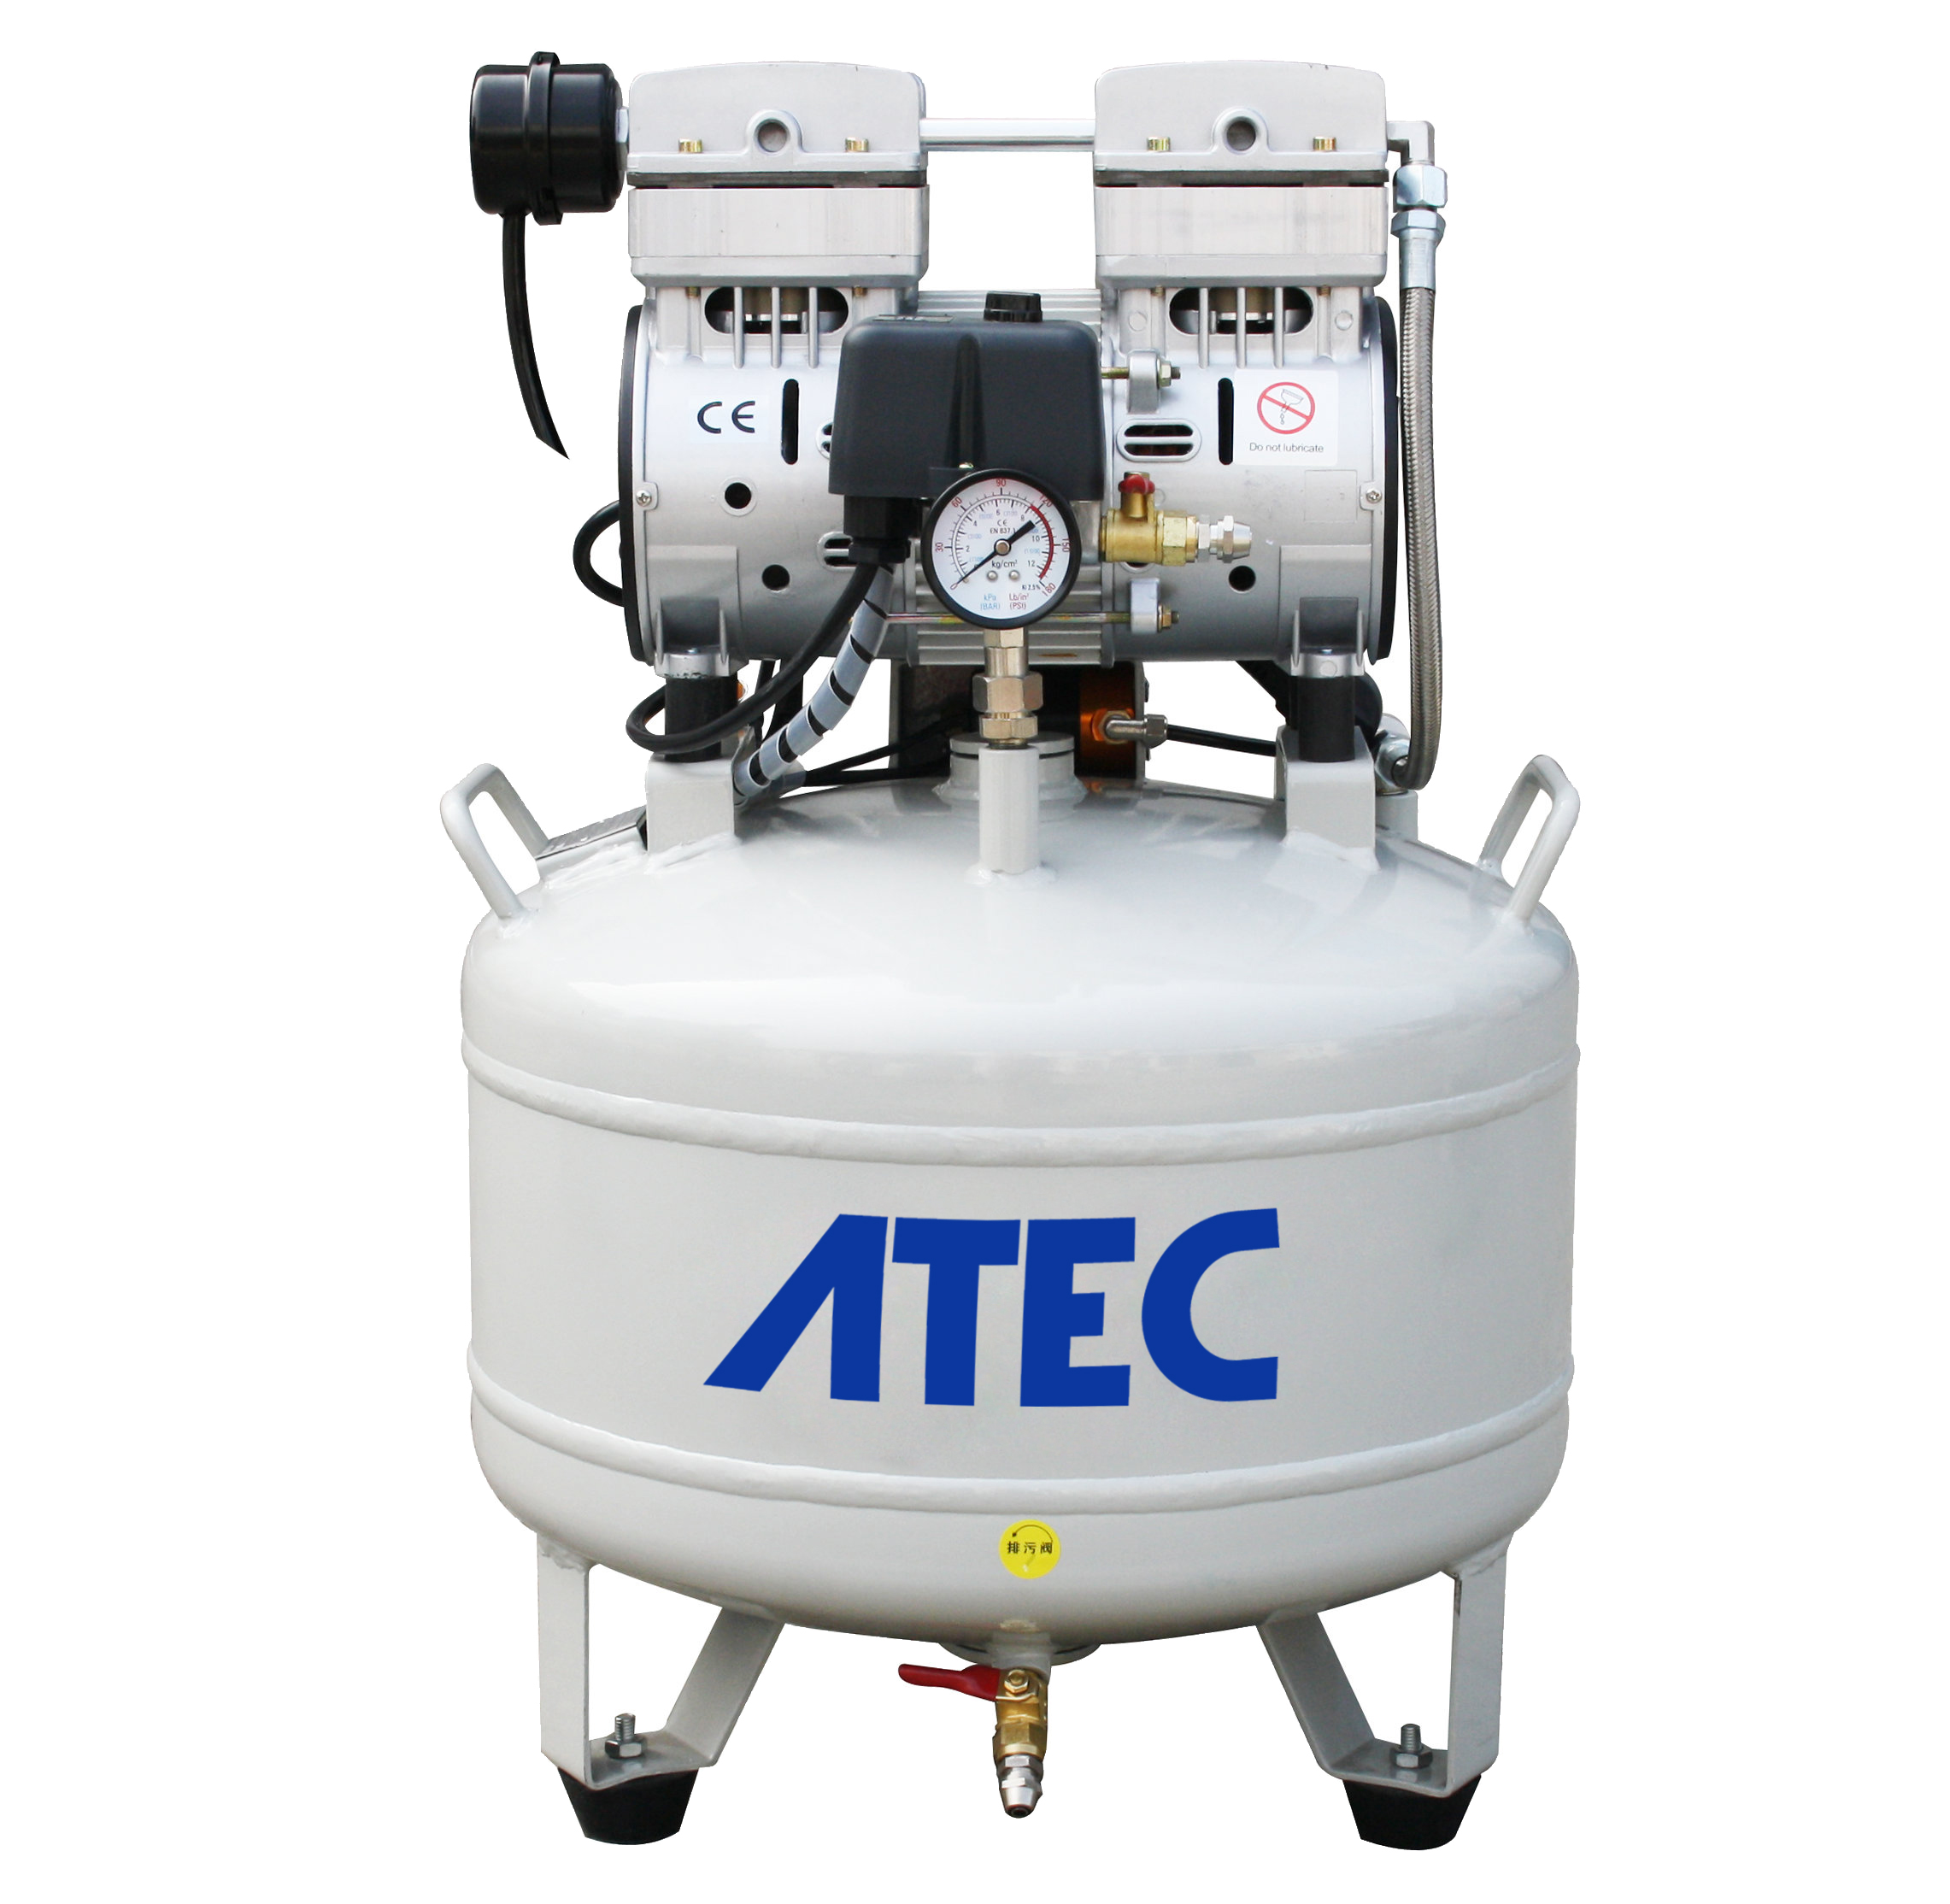 ATEC/翔创 静音无油空气压缩机 AT80/38